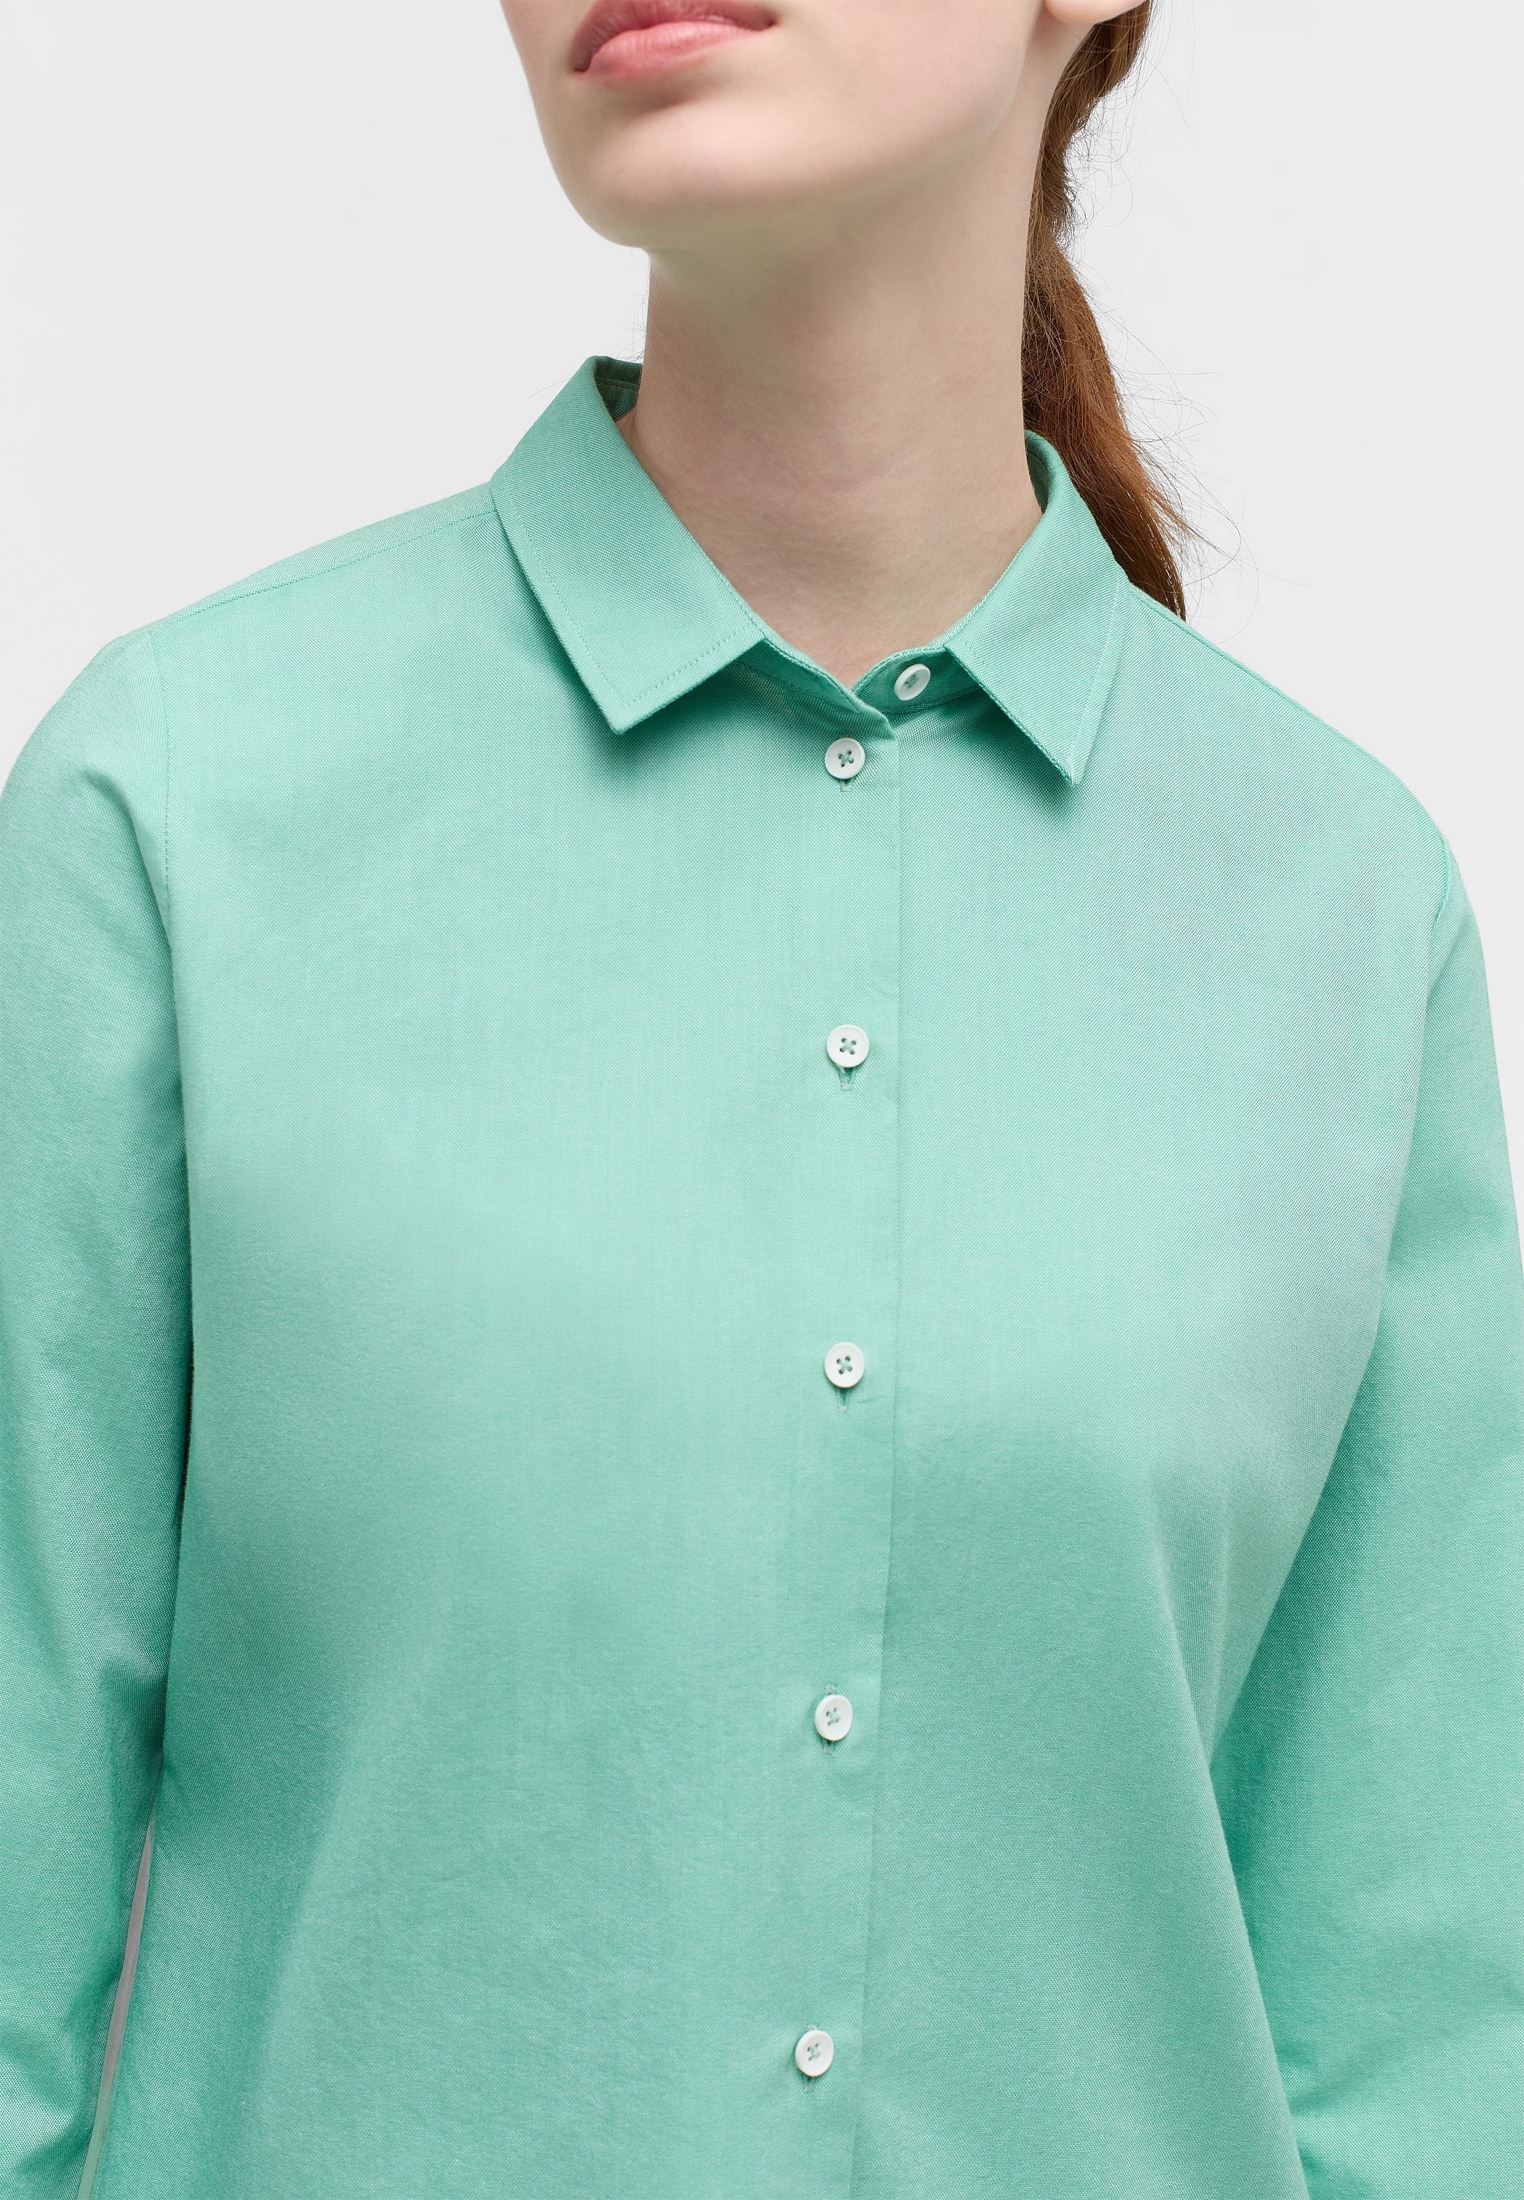 Oxford Shirt Bluse in hellgrün unifarben | hellgrün | 50 | Langarm |  2BL04173-04-02-50-1/1 | Blusen